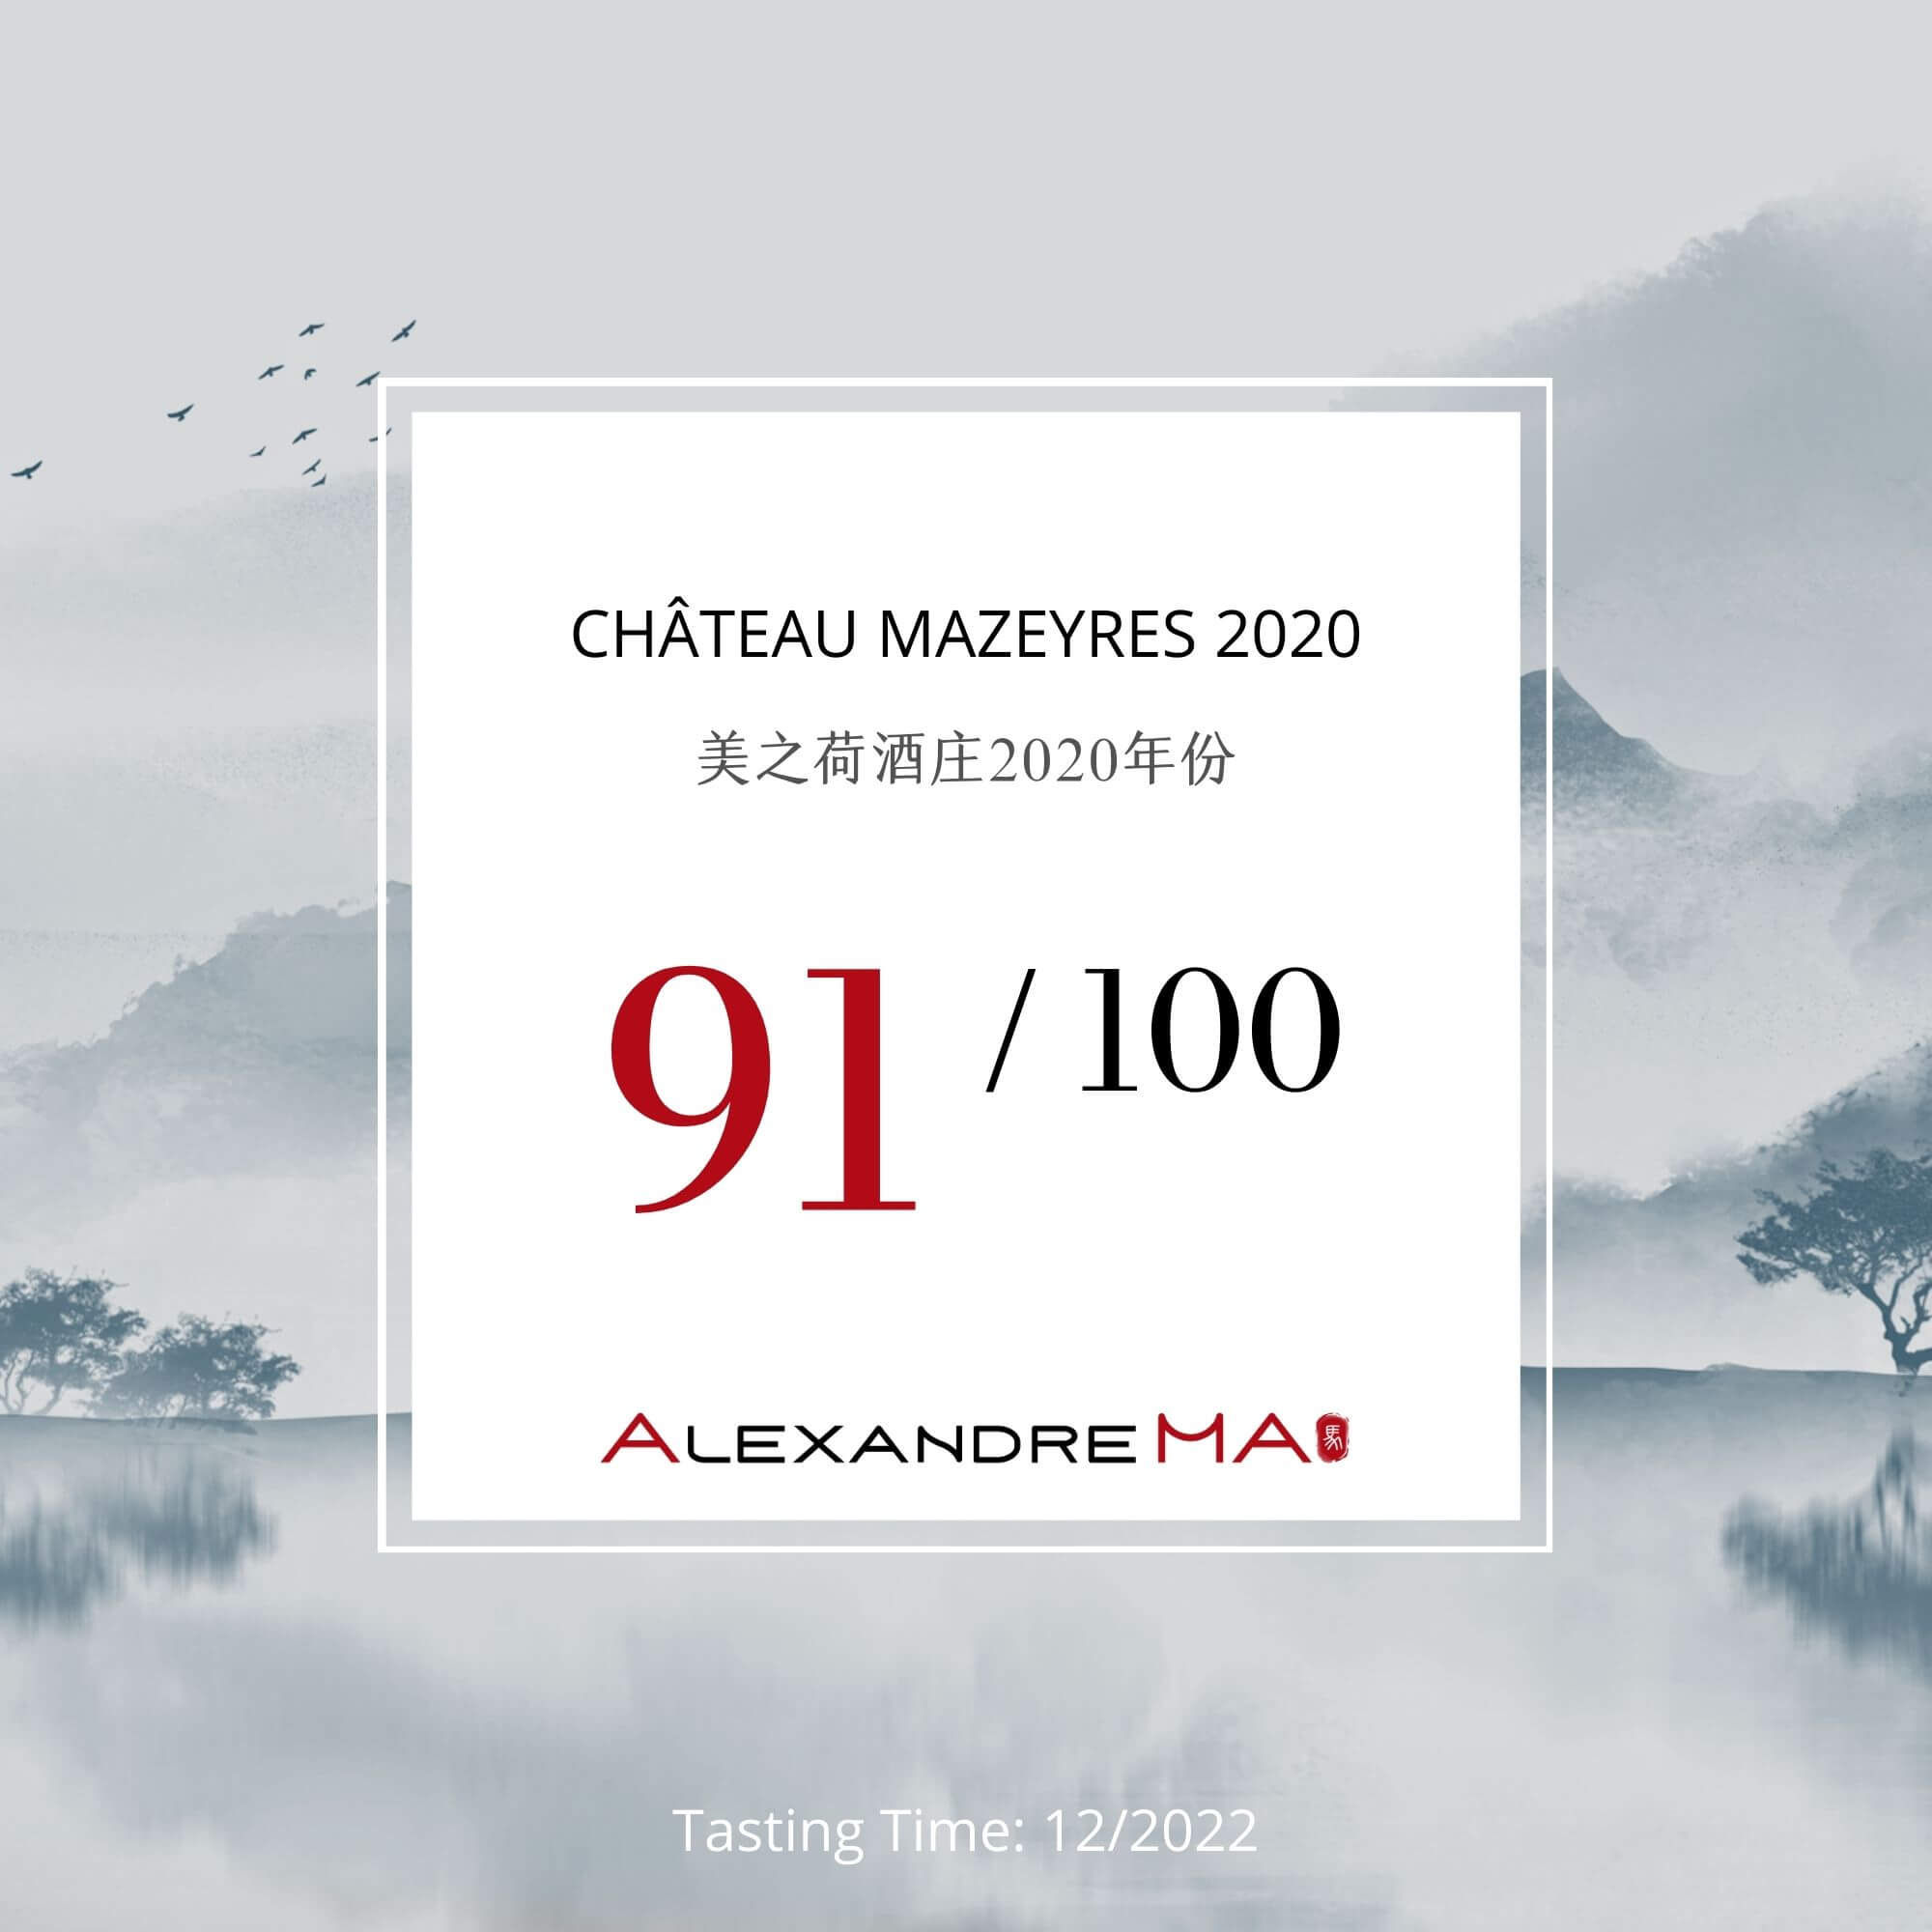 Château Mazeyres 2020 美之荷酒庄 - Alexandre Ma